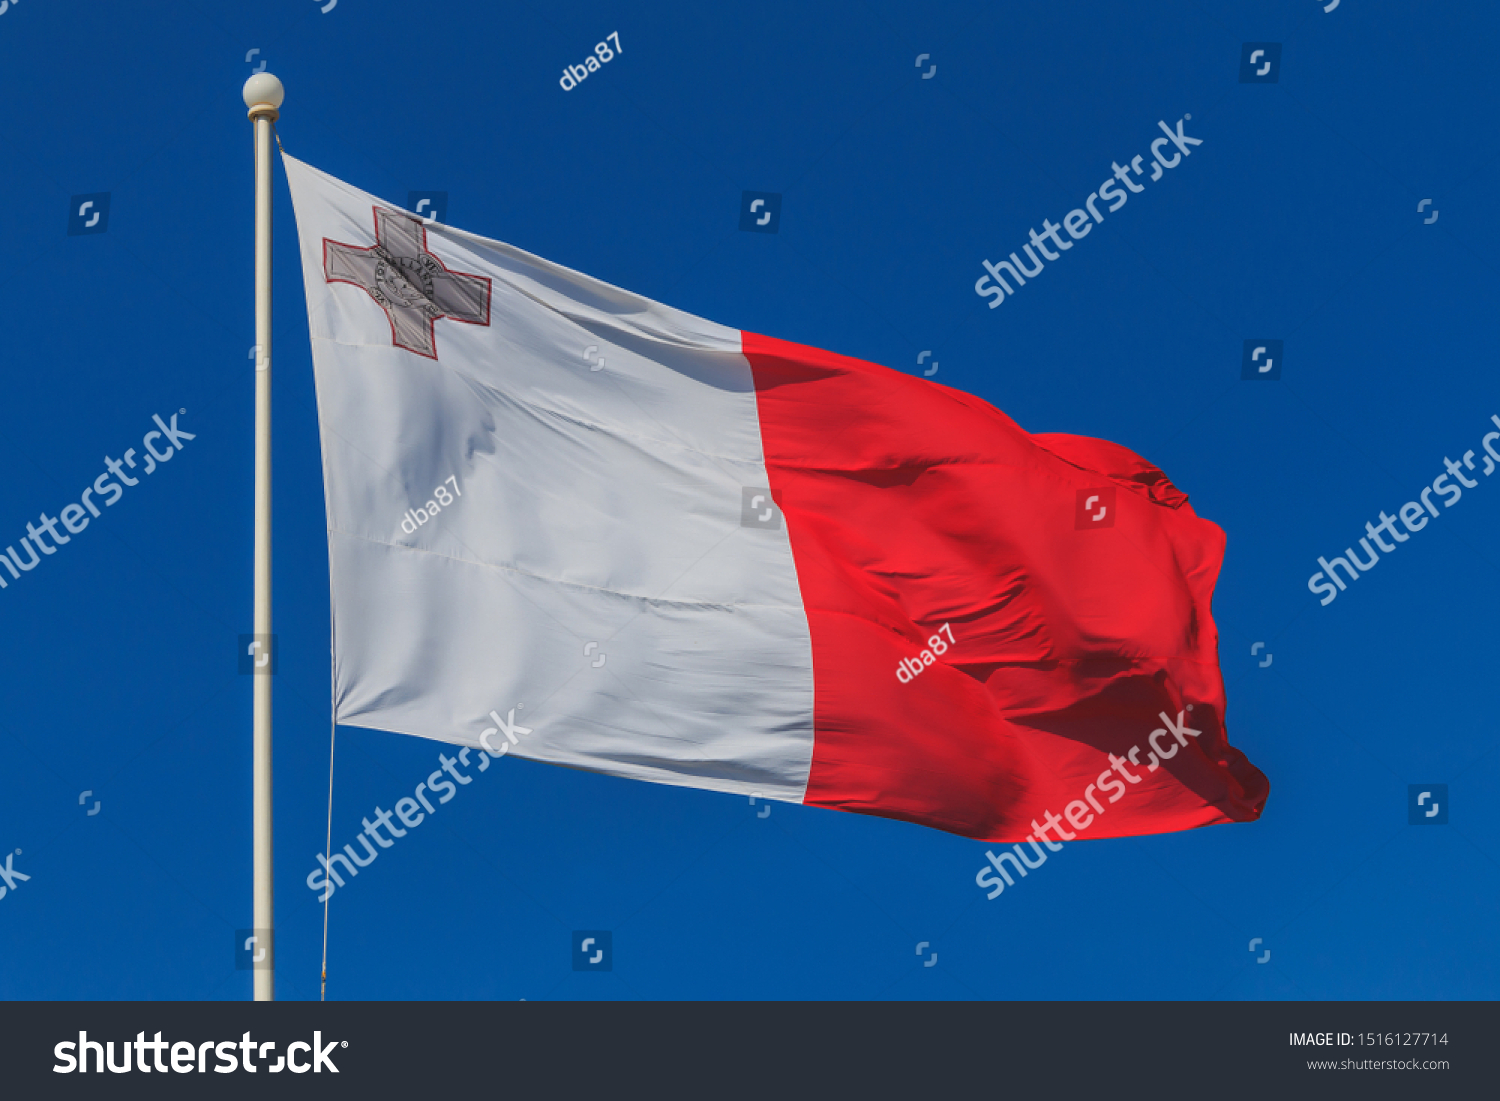 Malta national flag is waving in deep blue sky background #1516127714